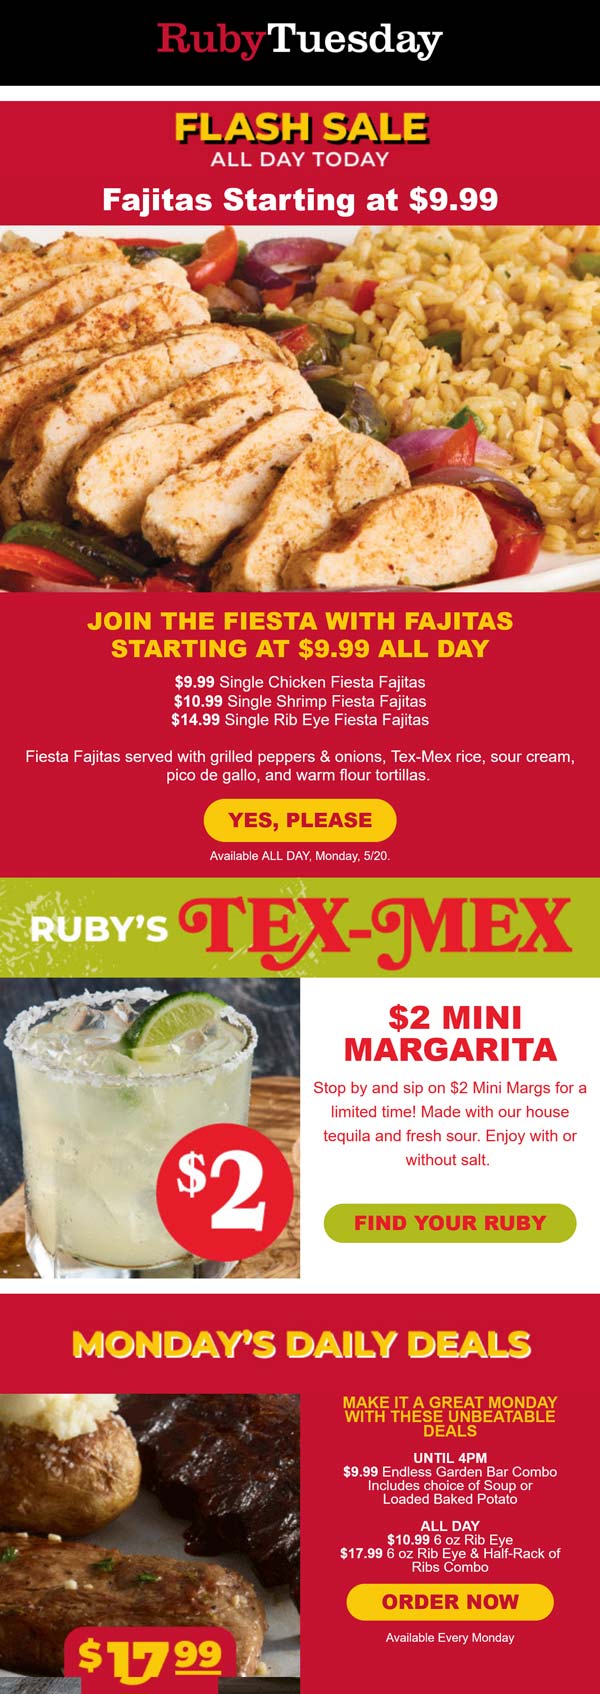 Ruby Tuesday restaurants Coupon  $10 fajitas & more today at Ruby Tuesday restaurants #rubytuesday 